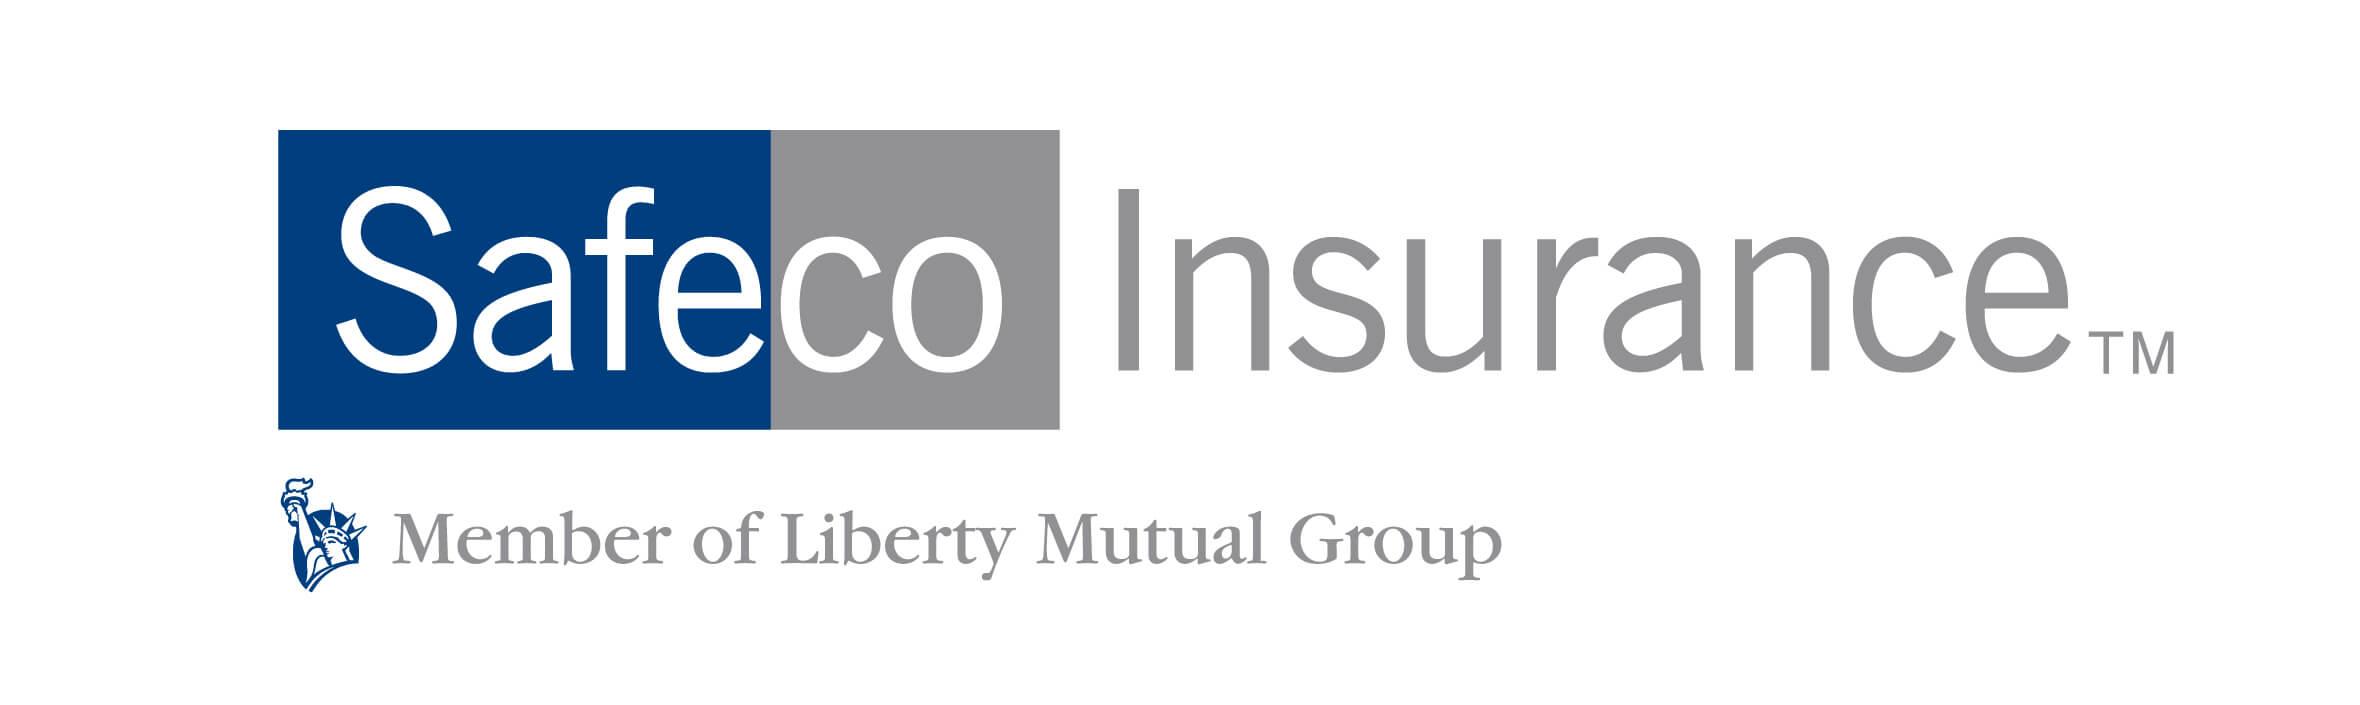 Car with Safeco Logo - SafeCo Insurance Review, Home, Renters Insurance